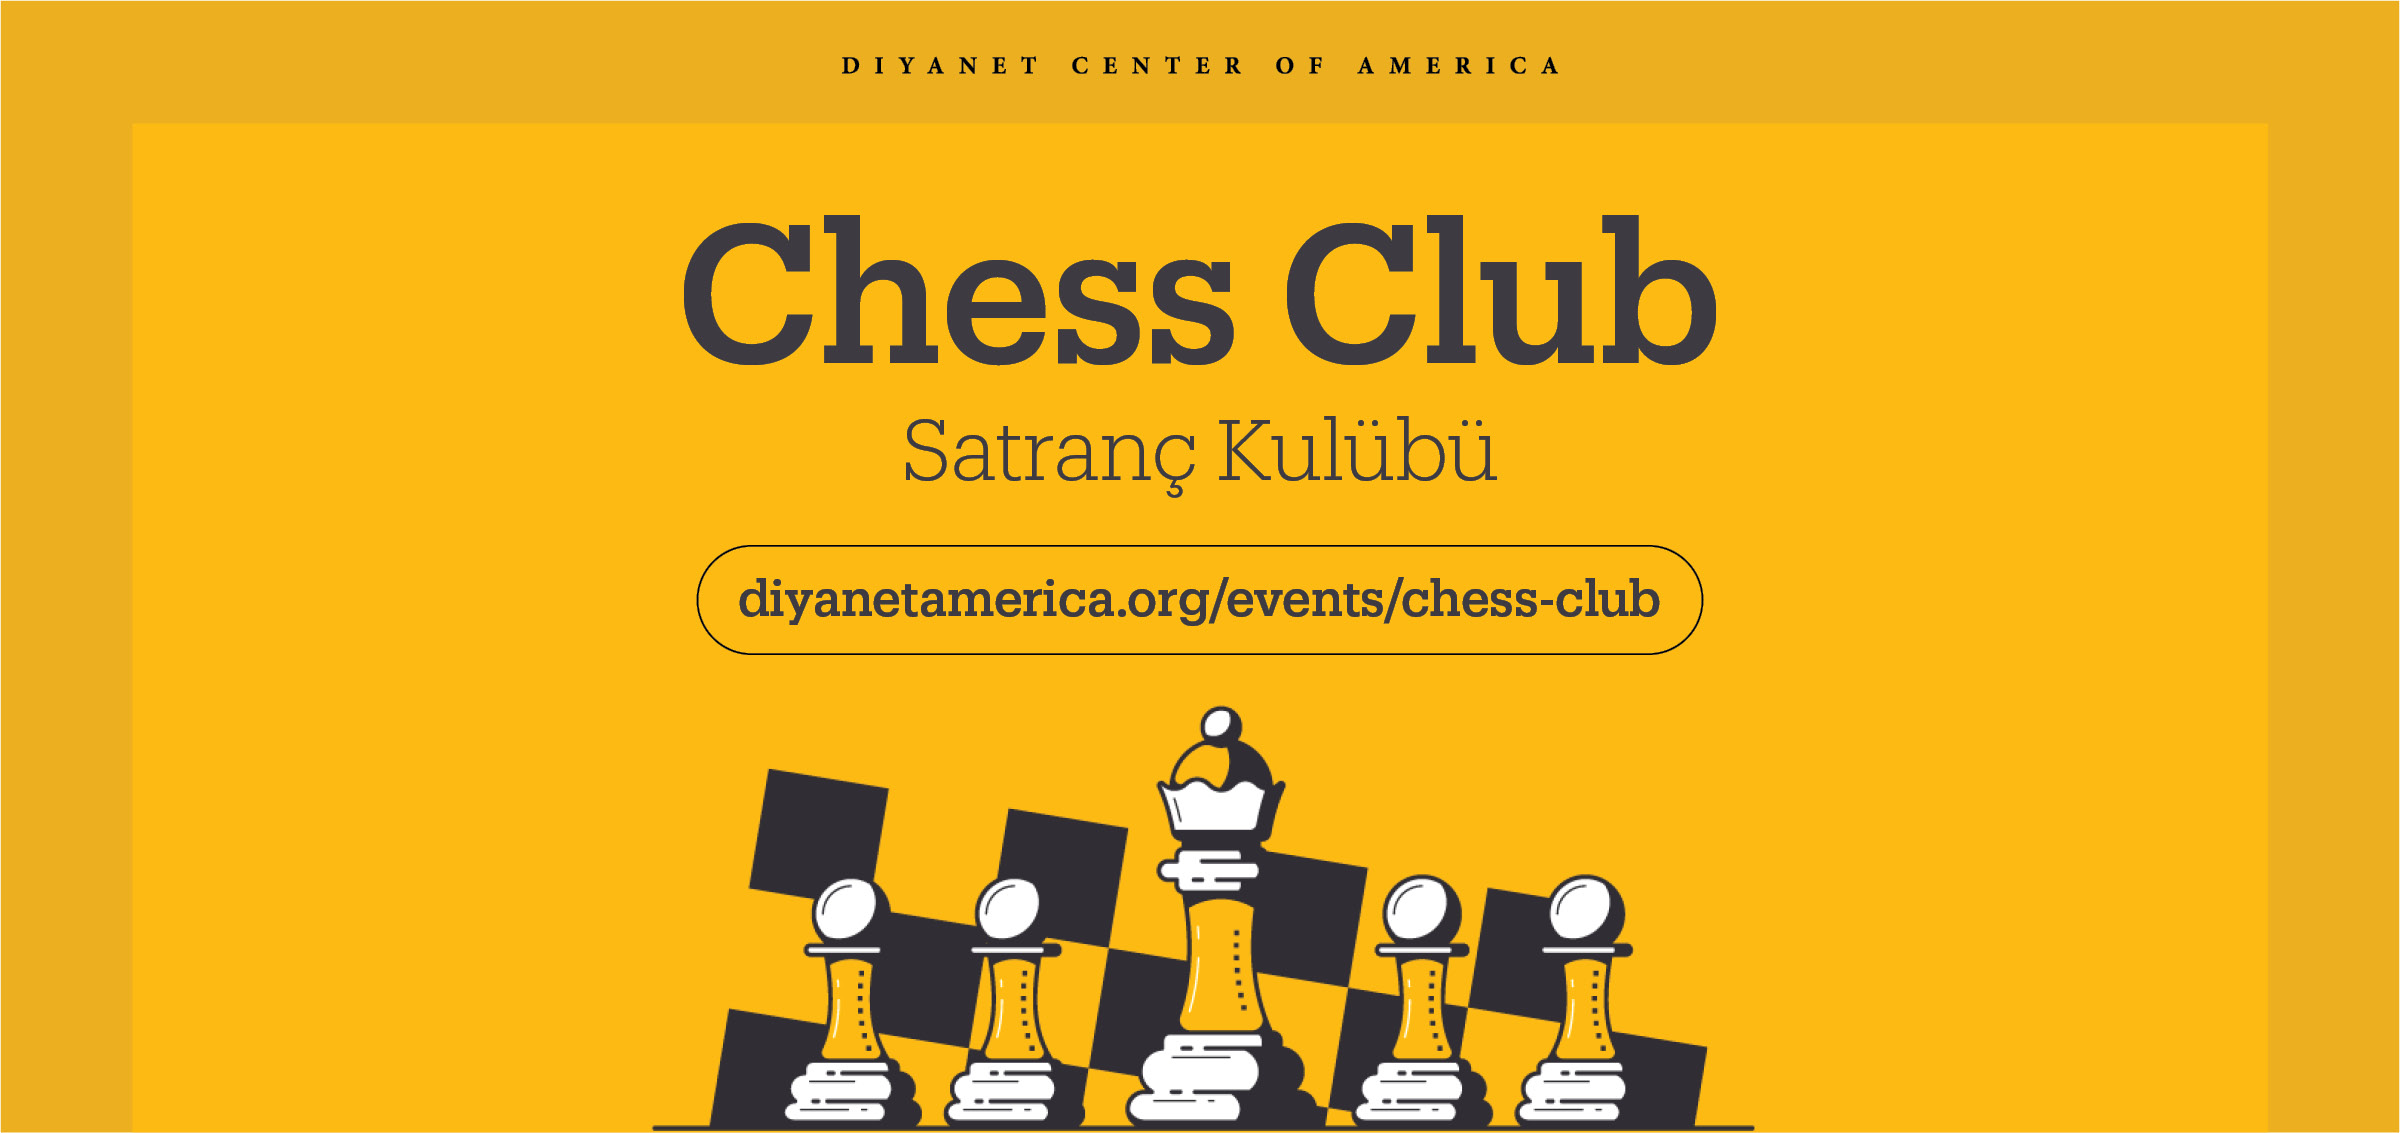 DCA Chess Club